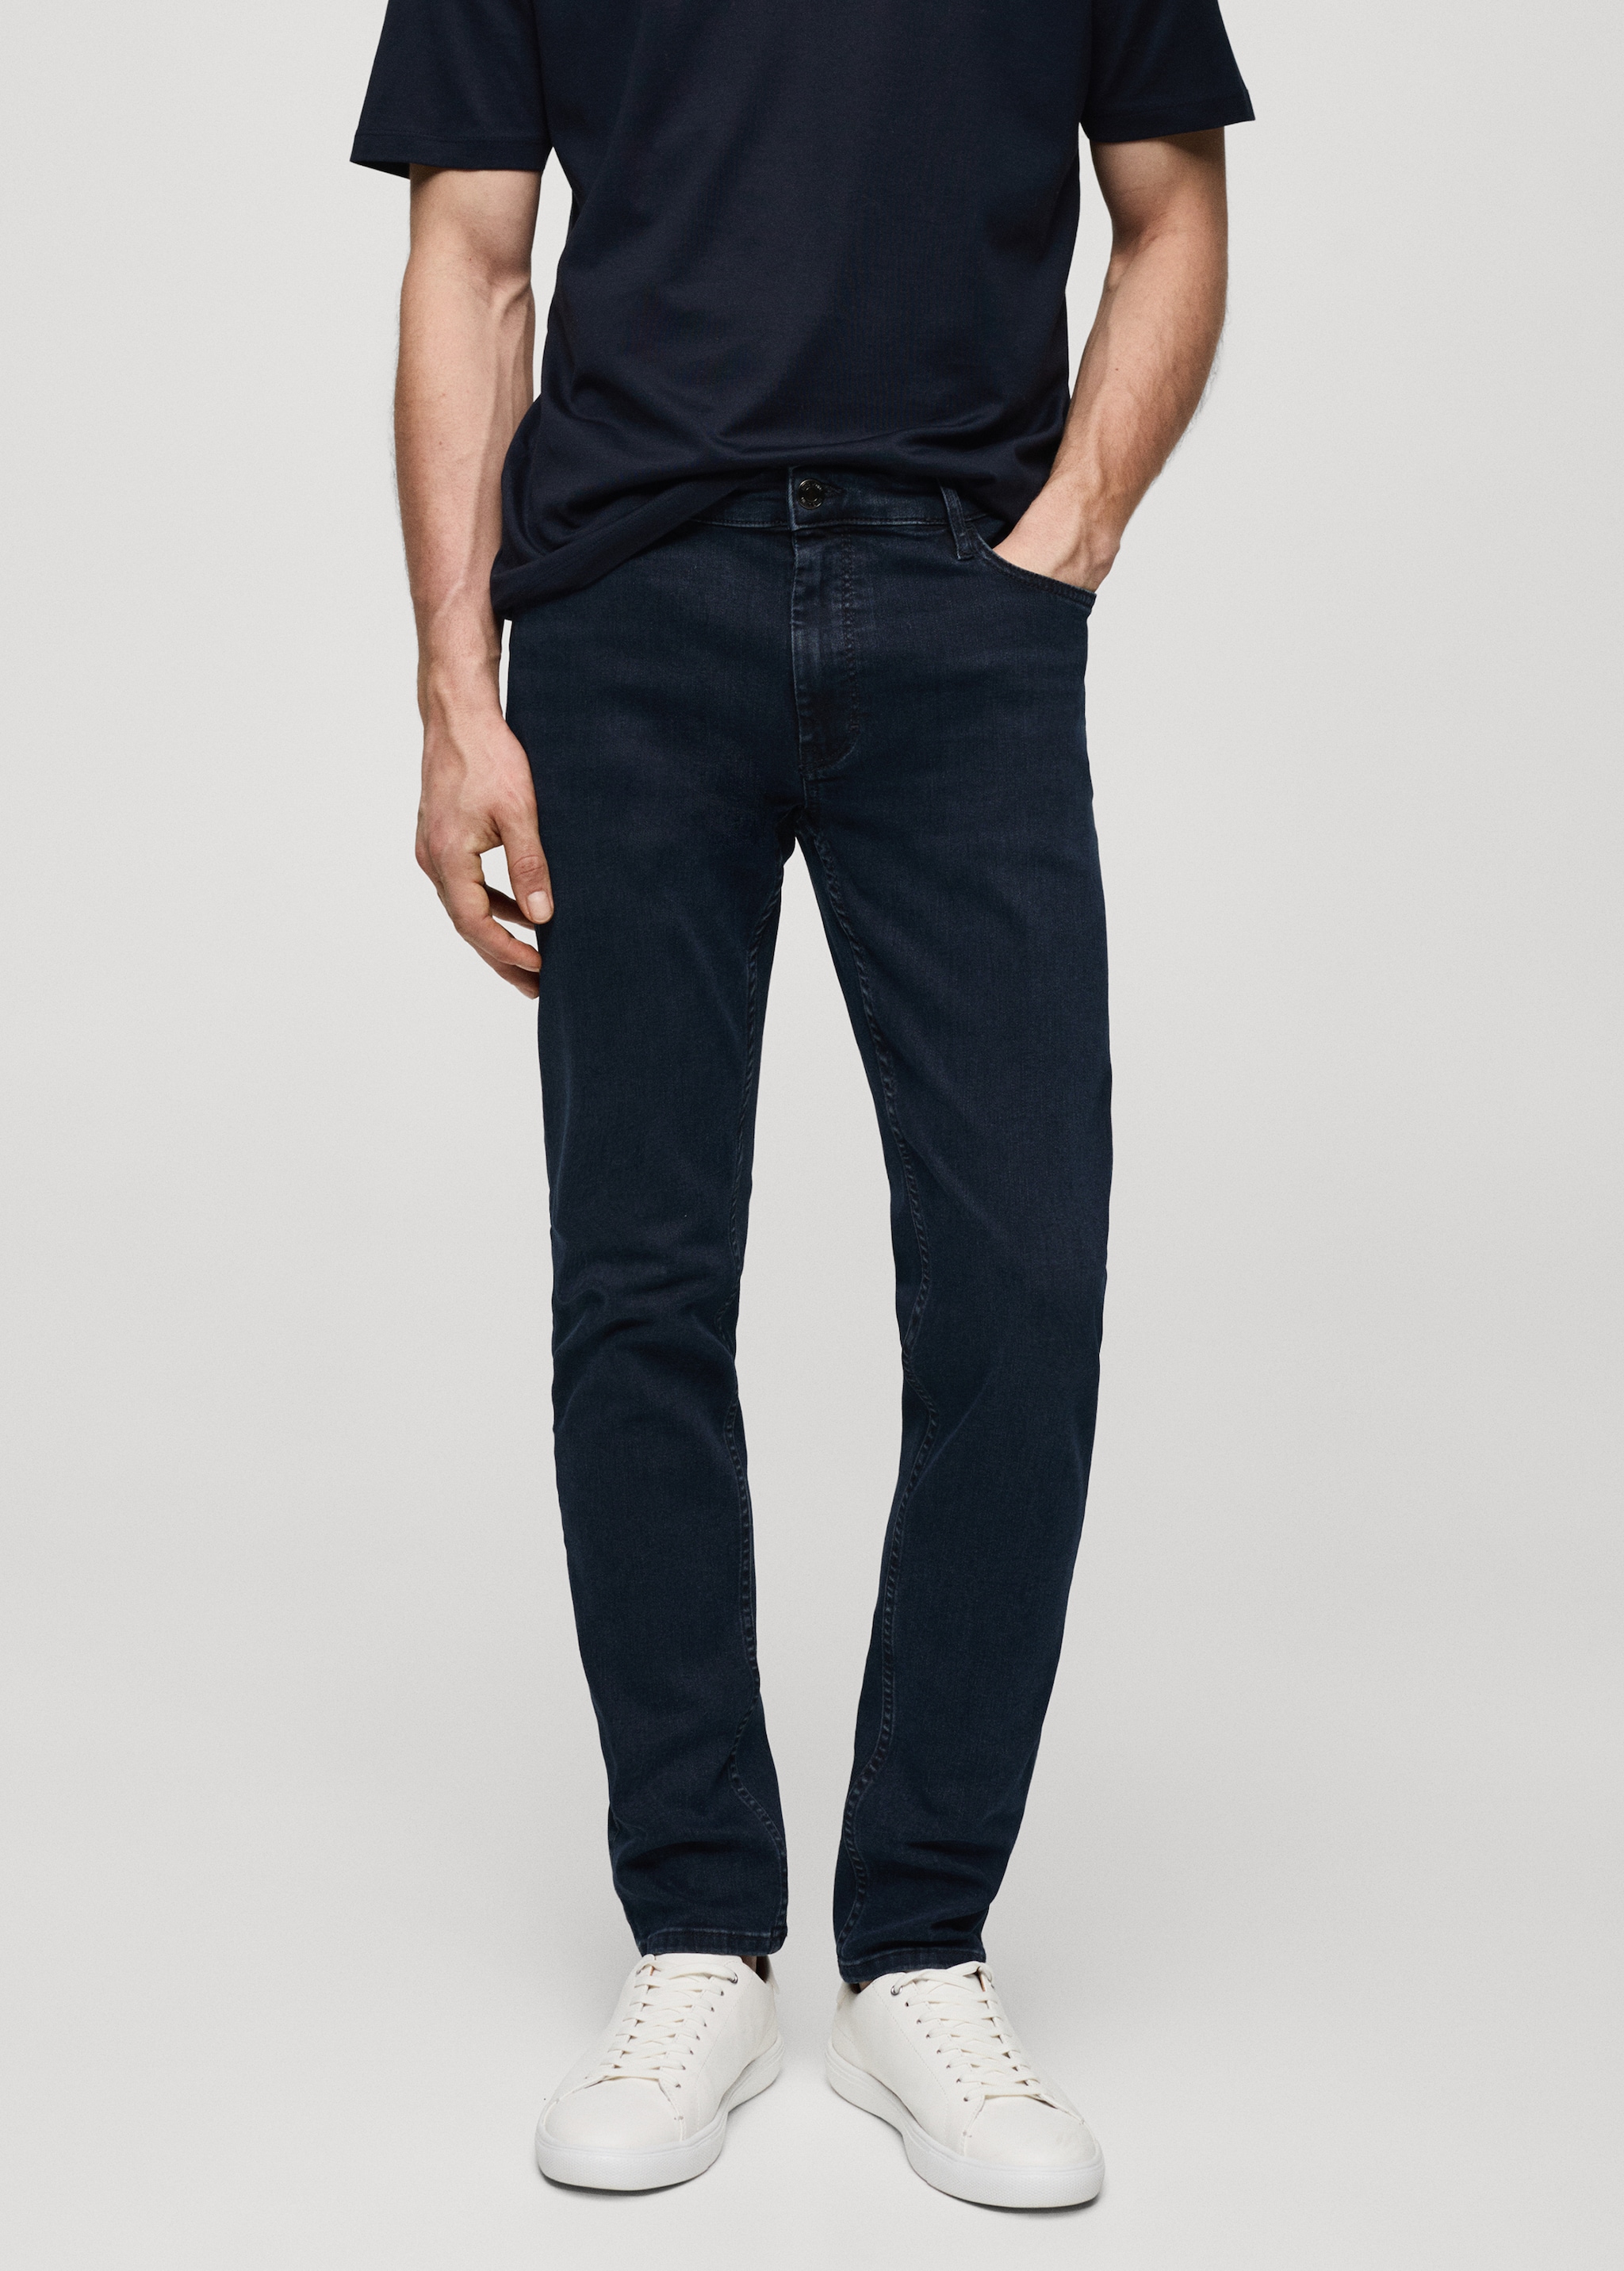 Patrick ultra Soft Touch slim fit jeans - Middenvlak